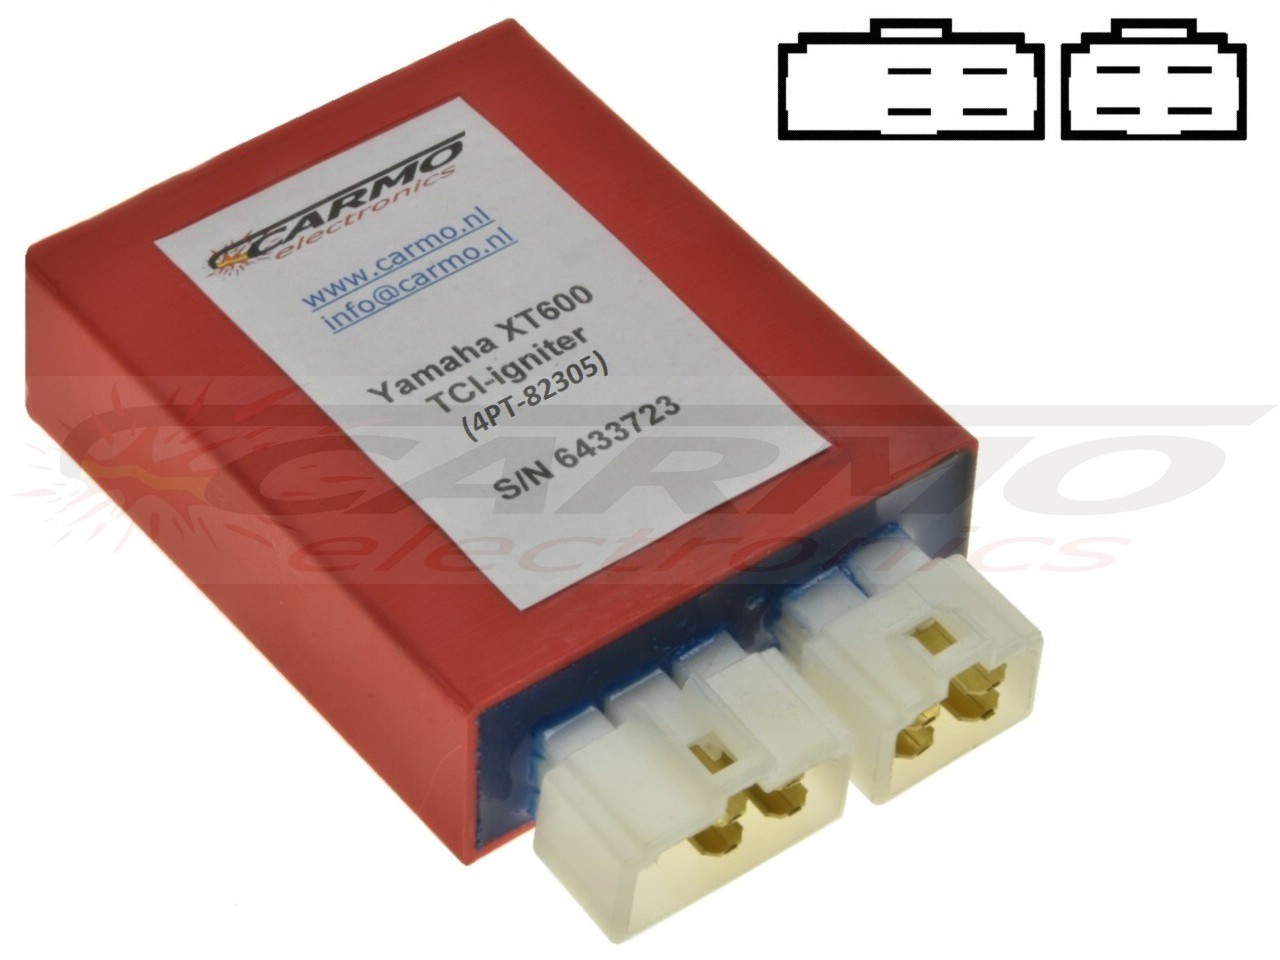 Yamaha XT600 XT600E igniter ignition module CDI TCI Box (4PT-82305) - Clique na Imagem para Fechar